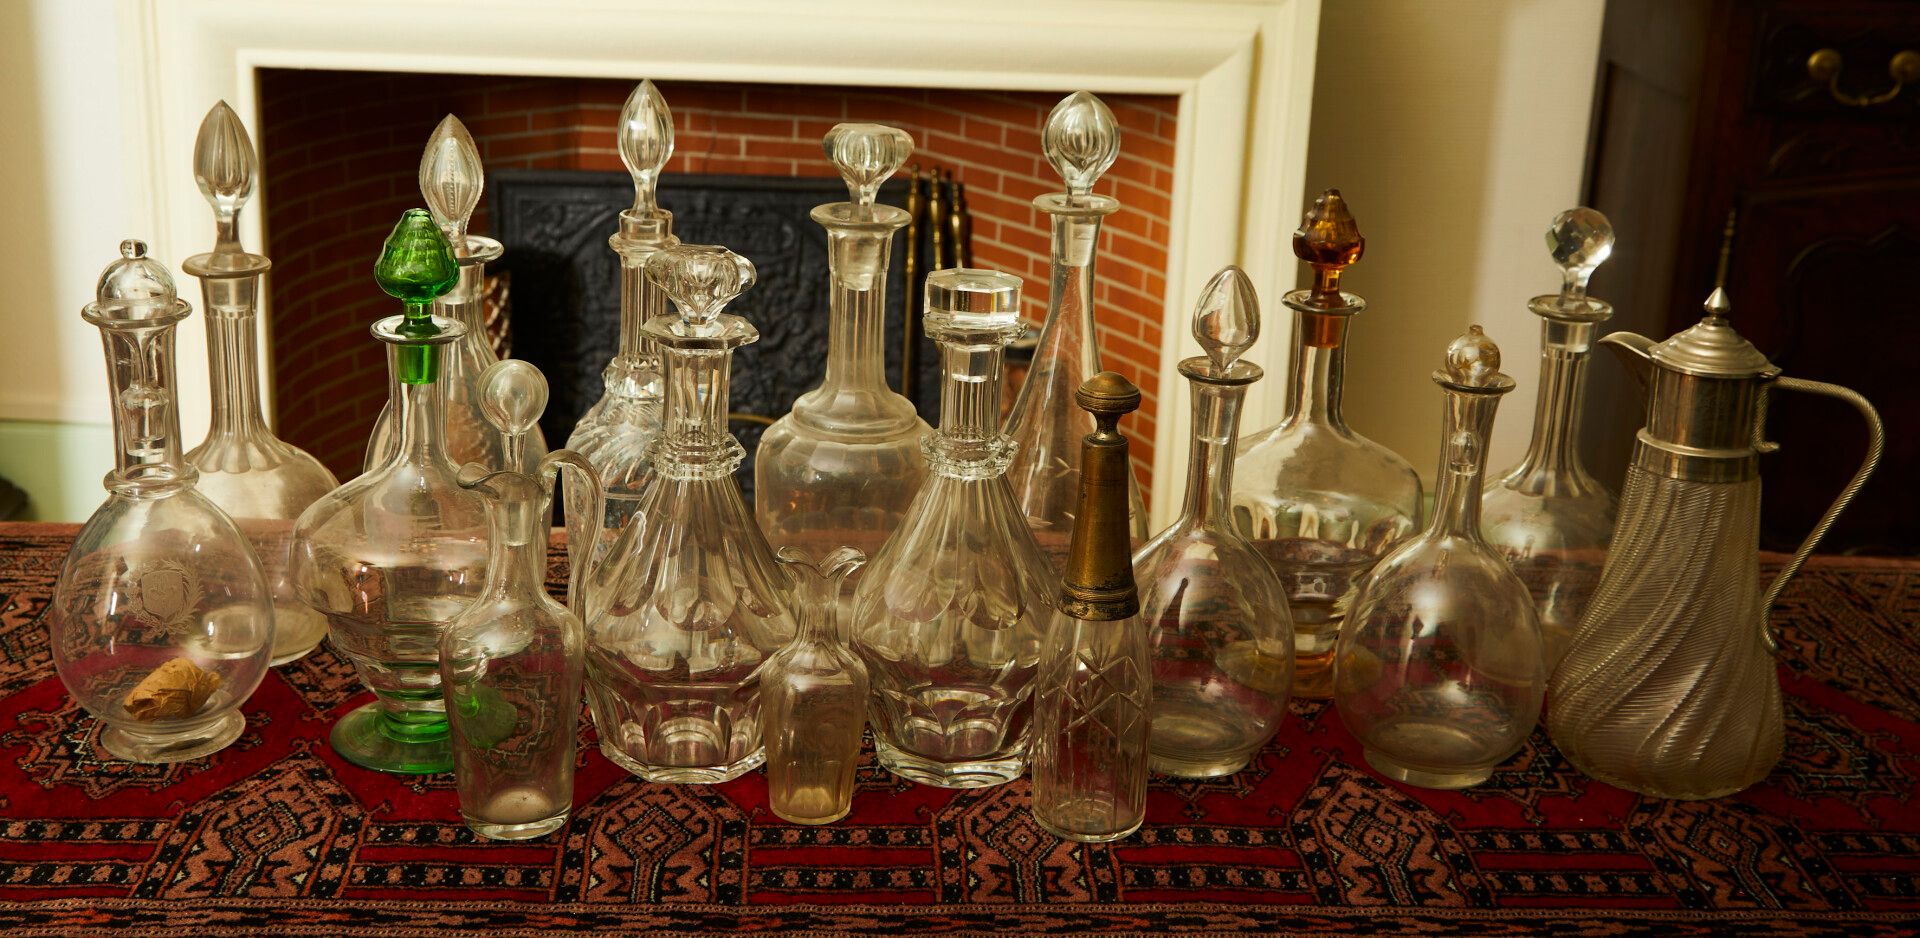 Null 17件古董水晶和玻璃醒酒器，包括BACCARAT和SAINT-LOUIS。

我们在那里加入。

- 磨砂玻璃壶，壶身有捏合和扭曲的棱线，顶部有银色金&hellip;